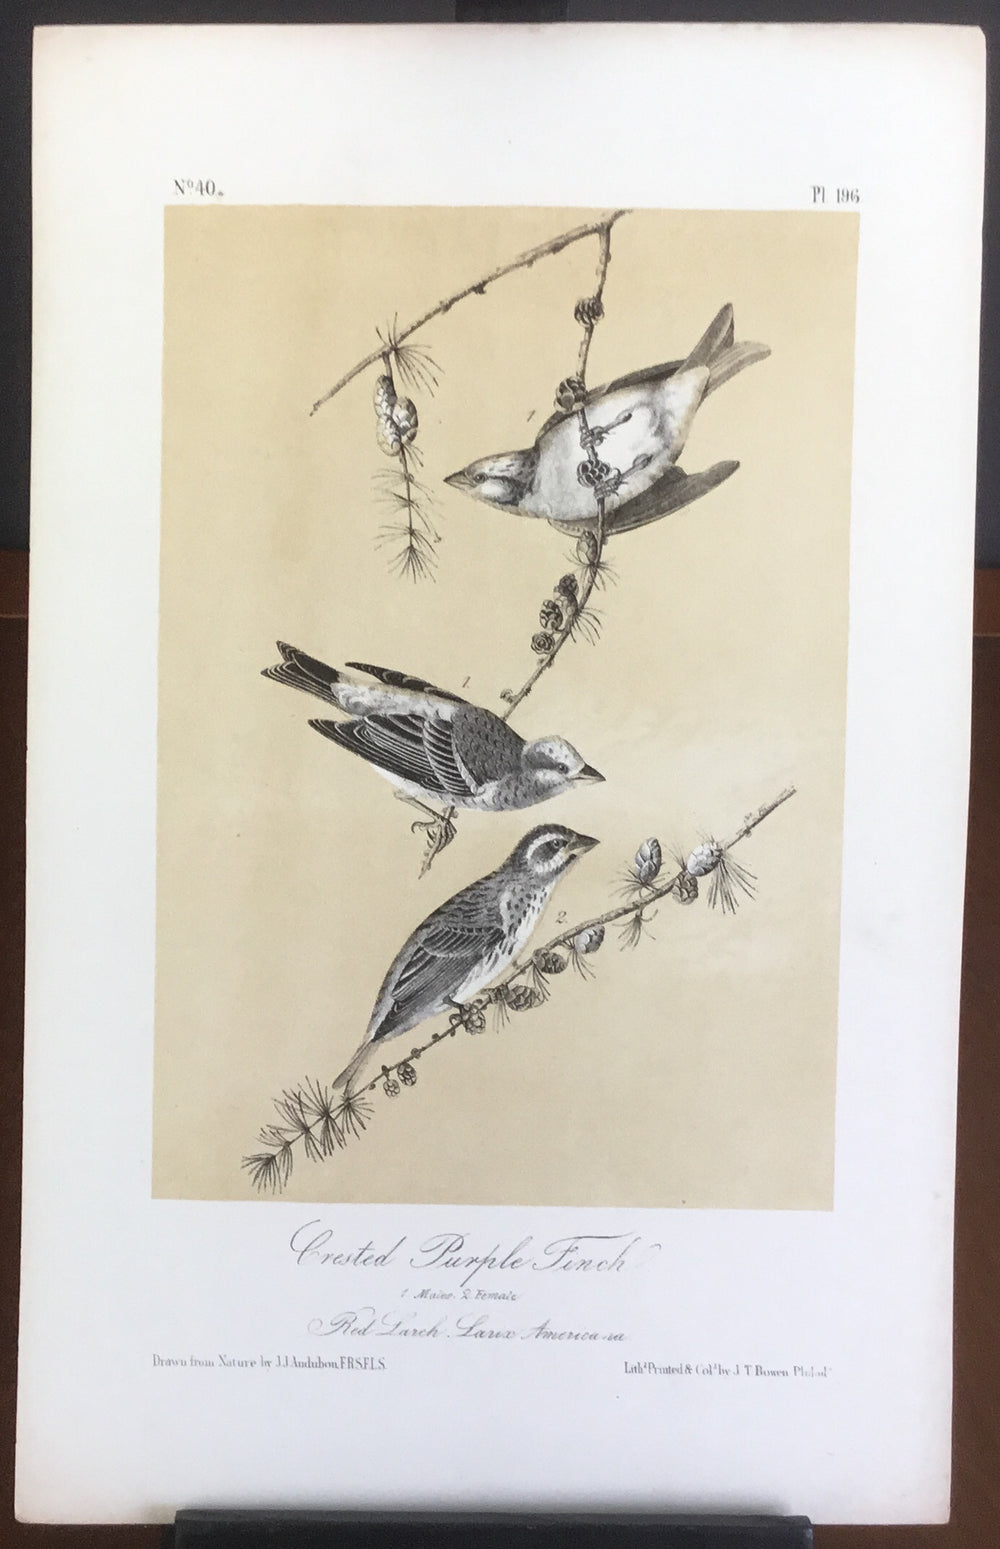 Audubon Octavo Crested Purple Finch, plate 196, uncolored test sheet, 7 x 11